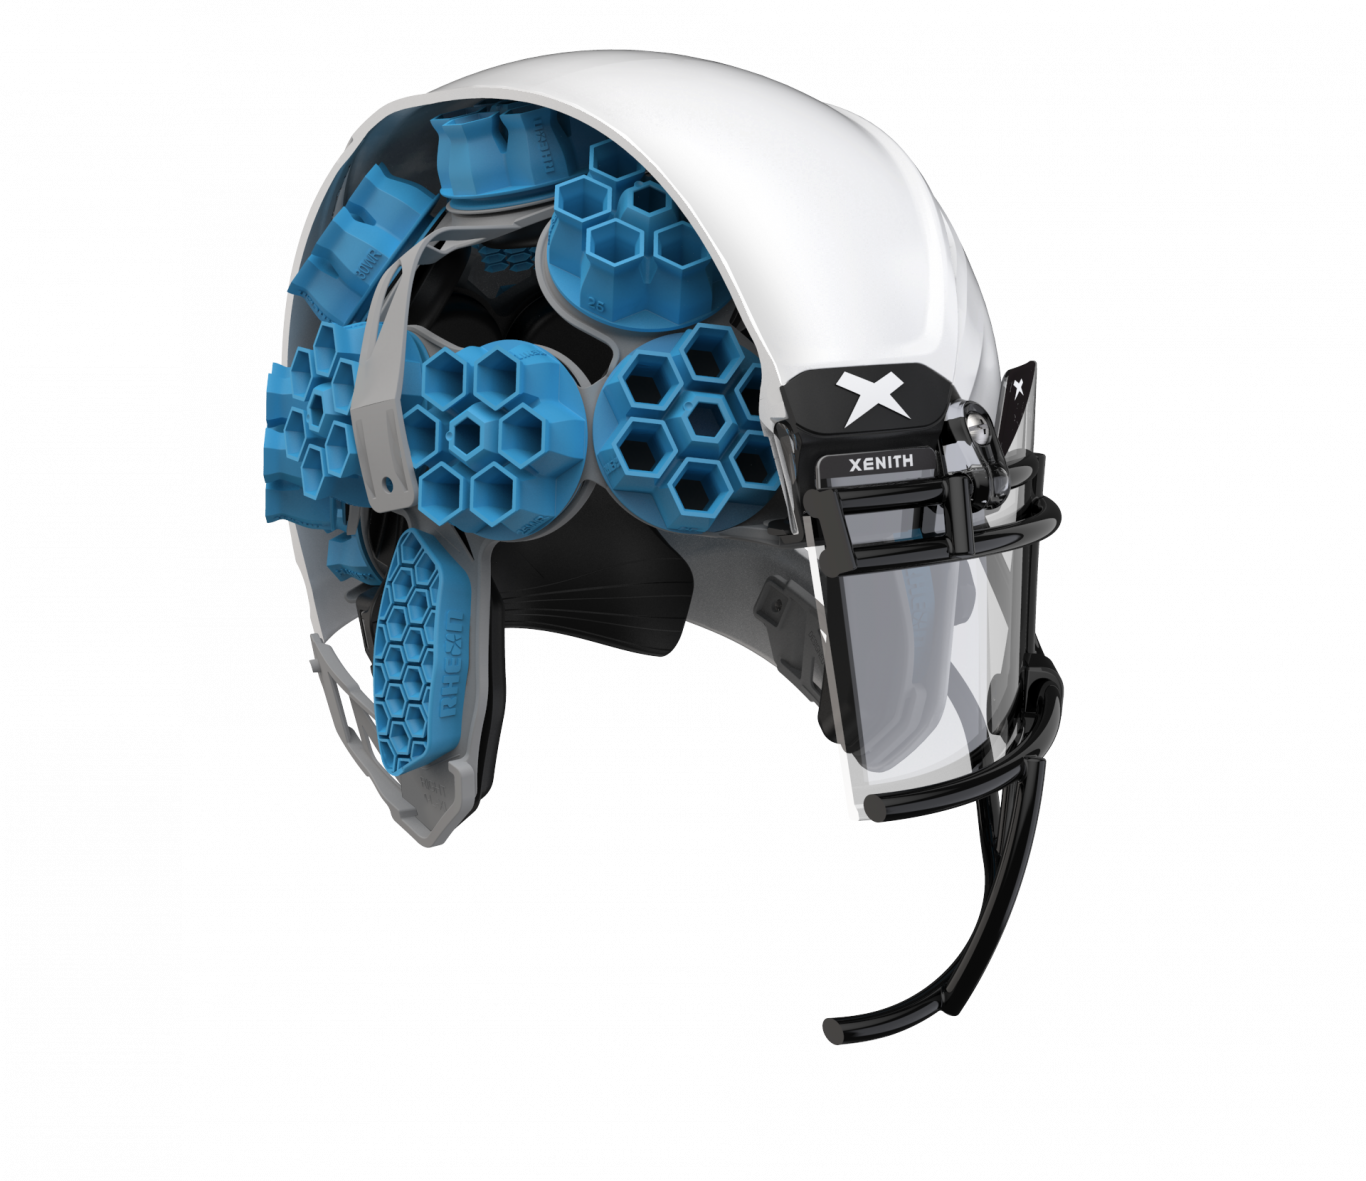 EOS, BASF, Kupol (and 3D Printing) Big Winners of the NFL Helmet Challenge  